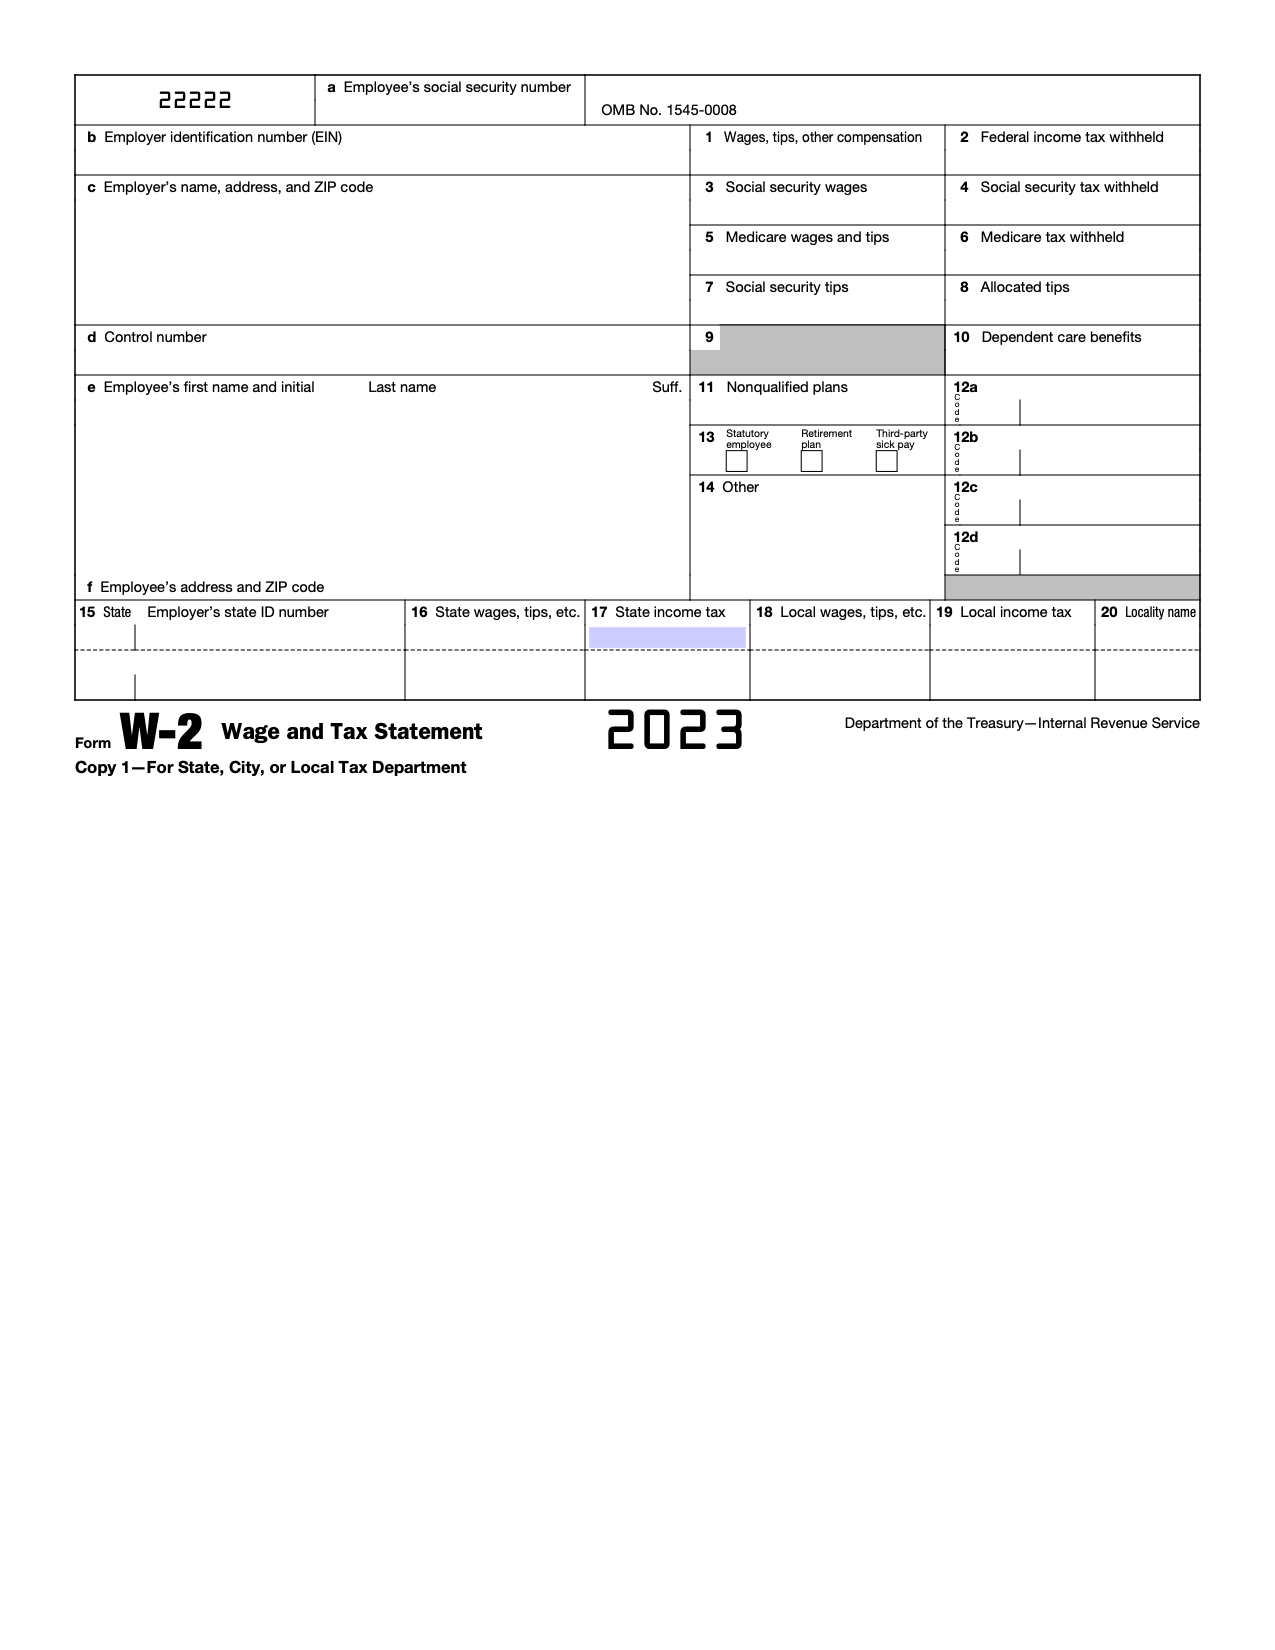 Free Irs Form W-2 | Wage And Tax Statement - Pdf – Eforms pertaining to W2 Form 2023 Pdf